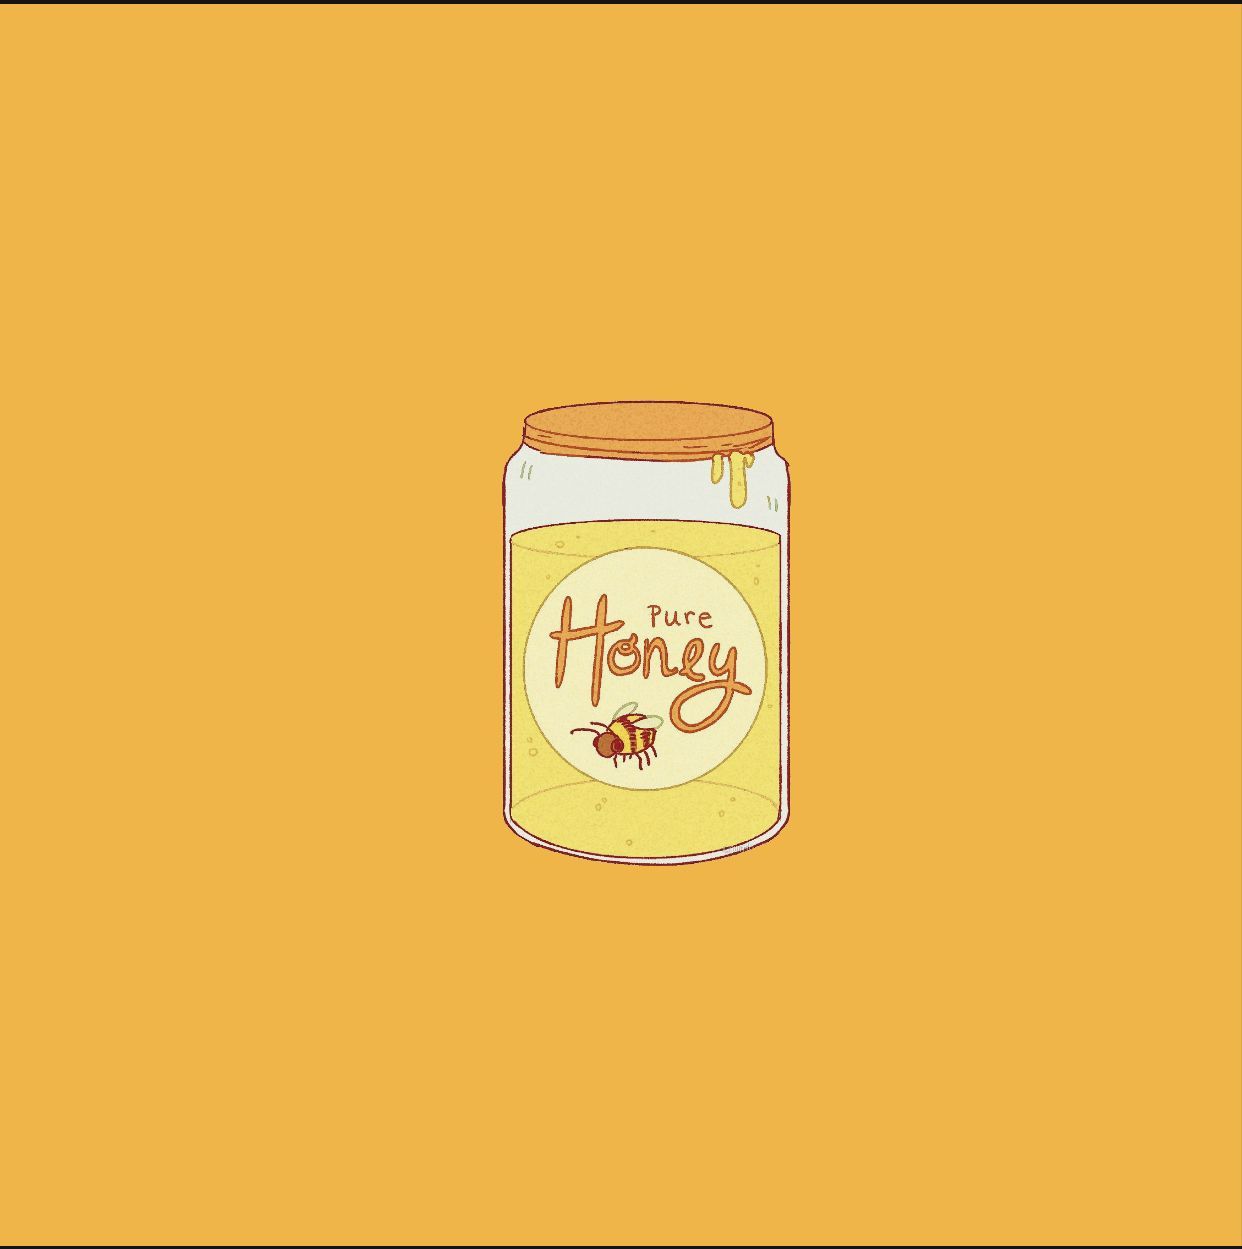 A honey jar on an orange background - Honey